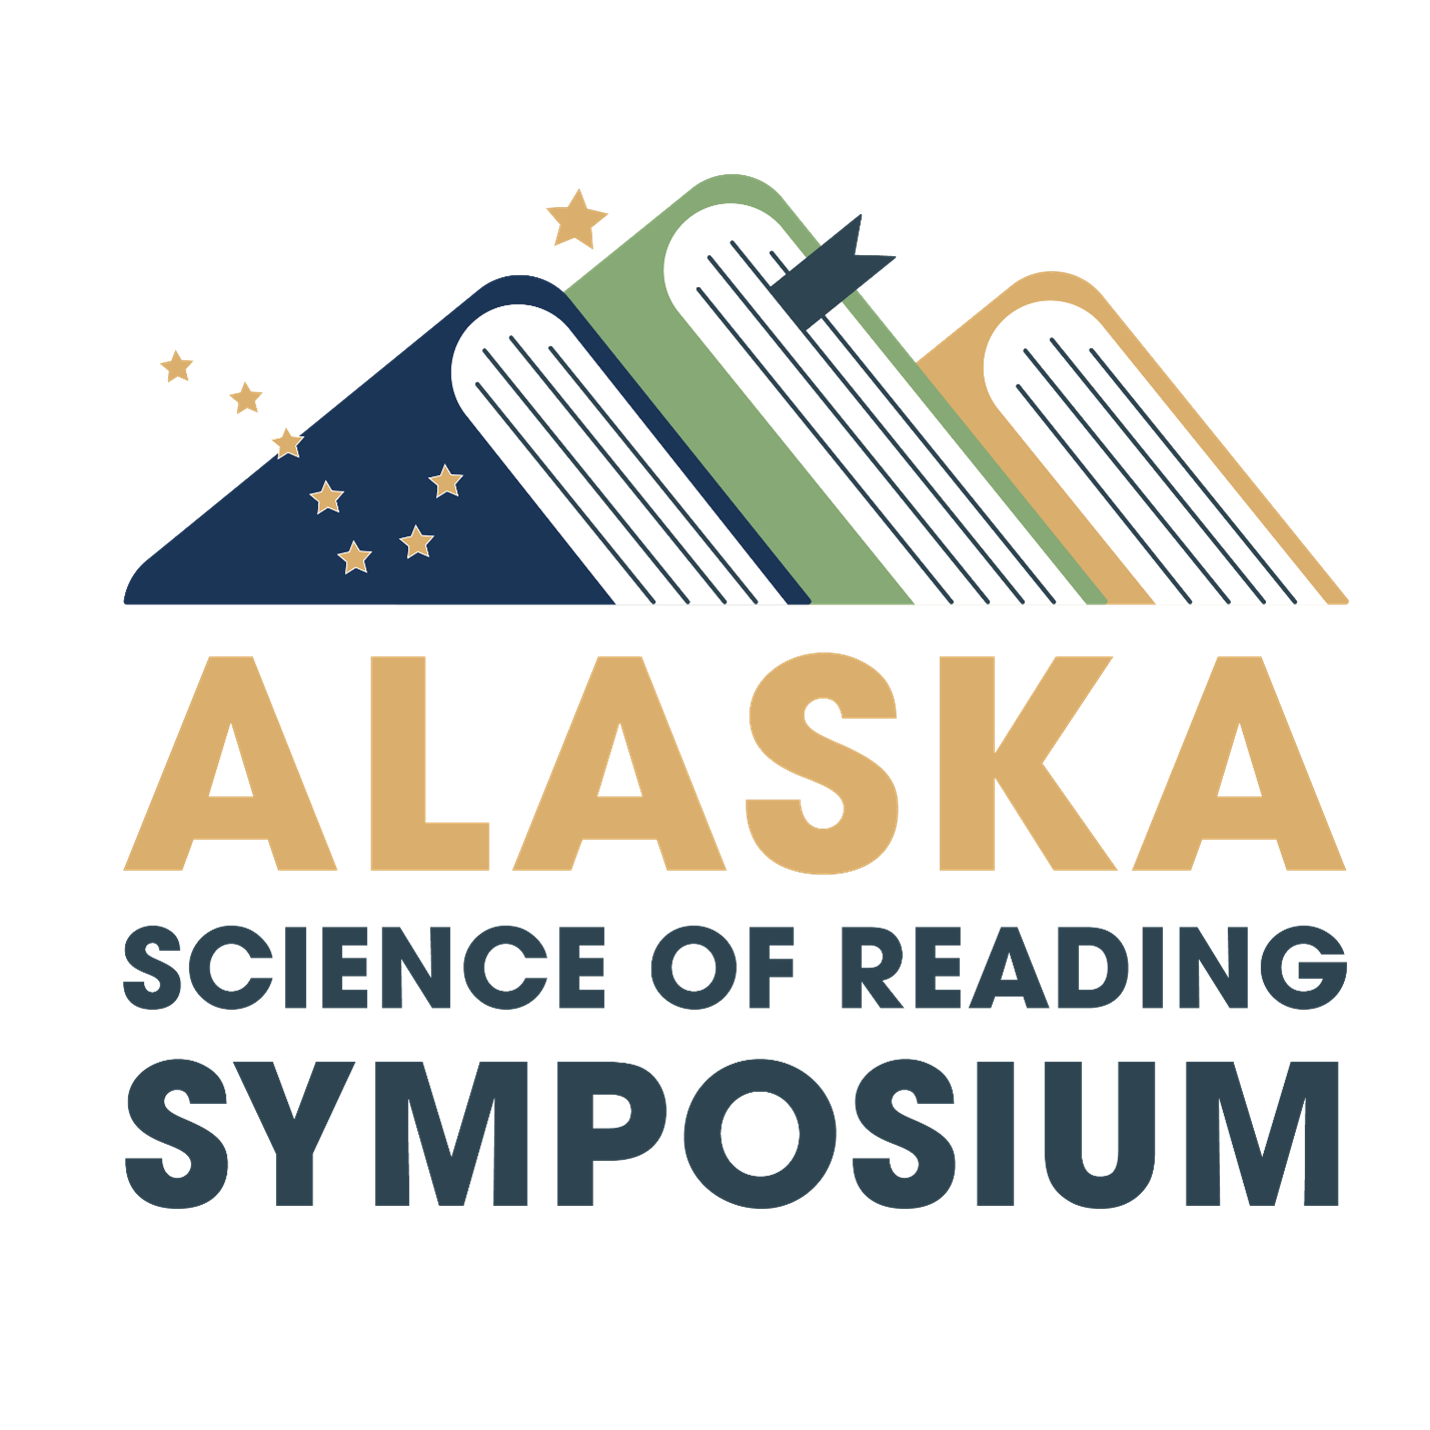 Alaska Science of Reading Symposium Image